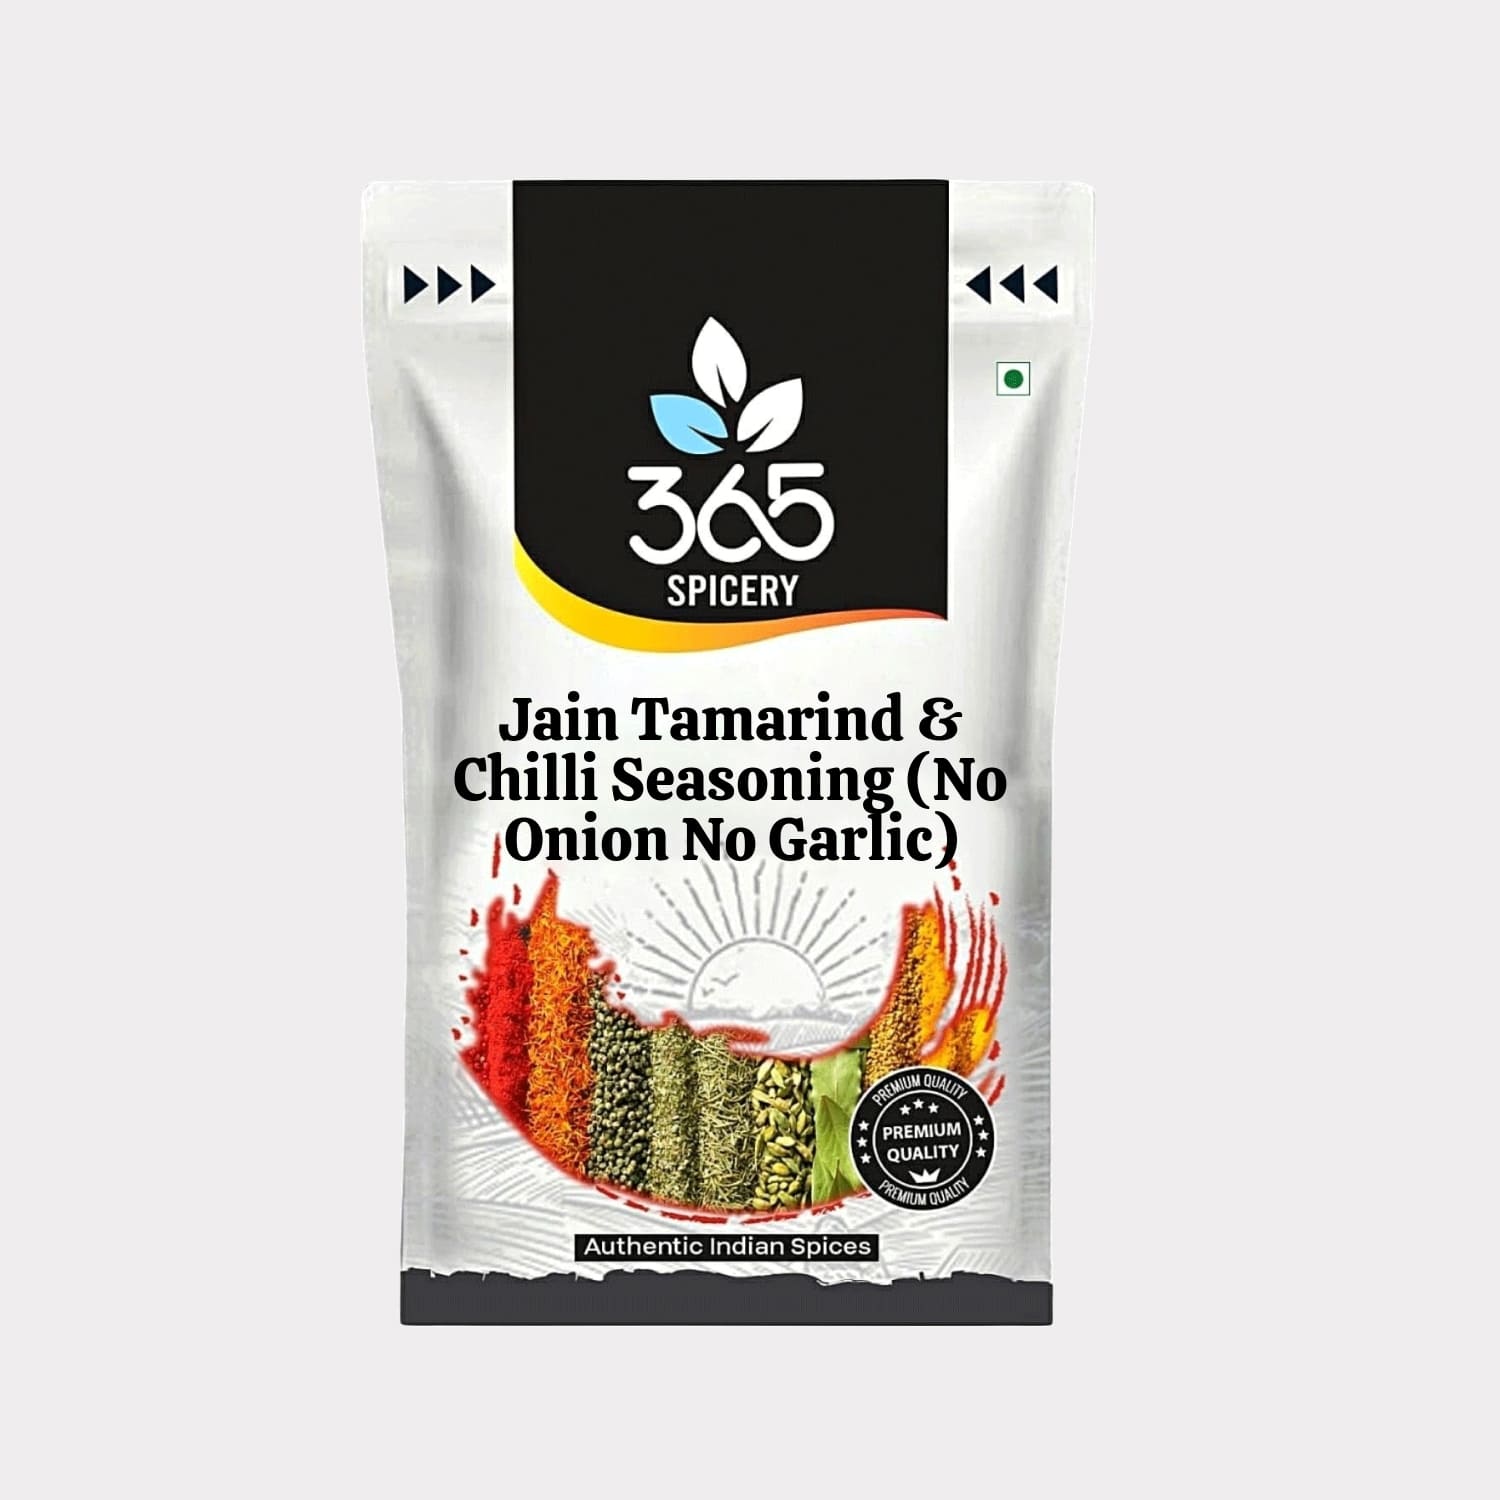 Jain Tamarind & Chilli Seasoning (No Onion No Garlic)